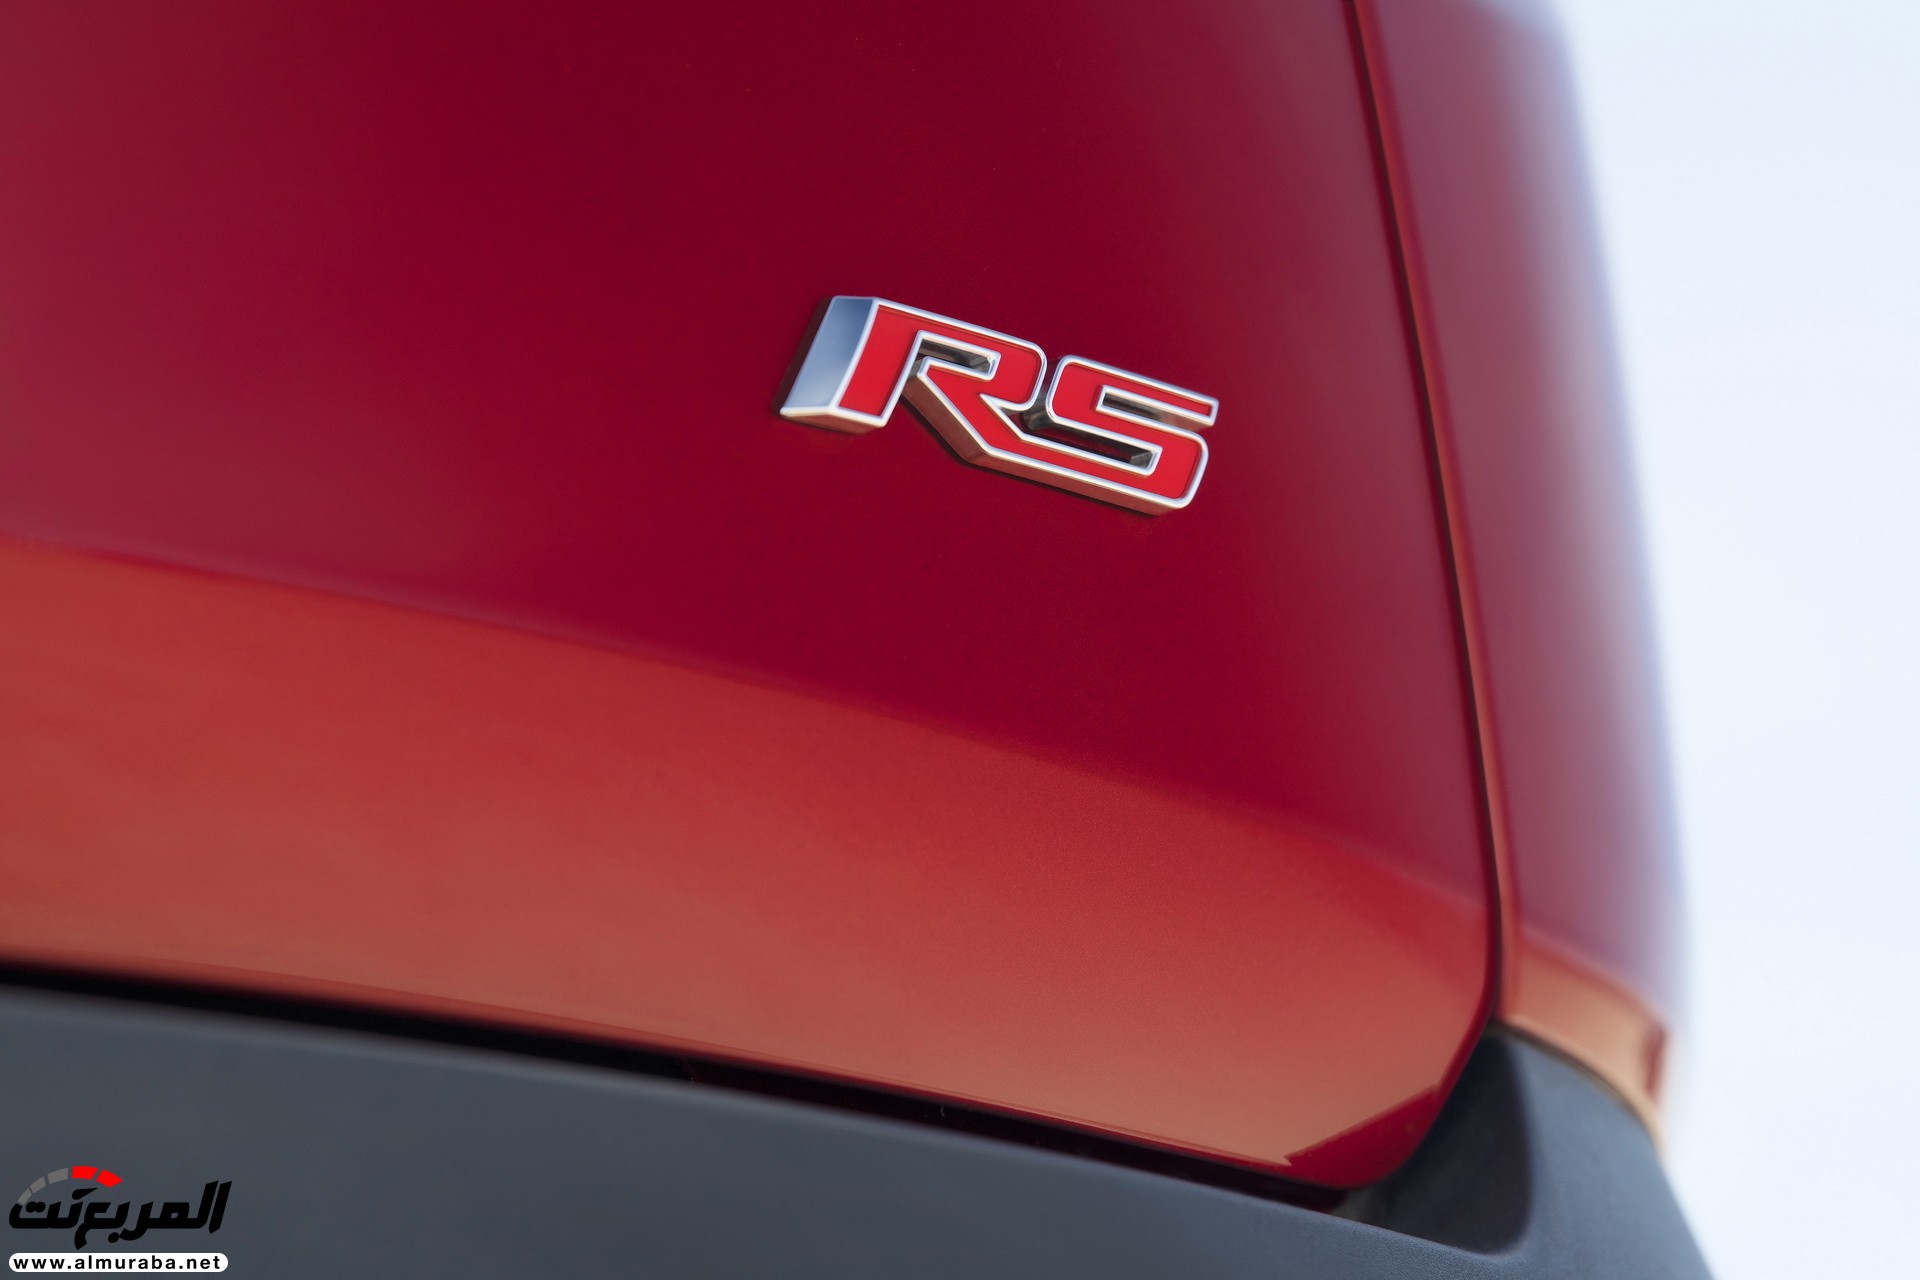 شيفروليه ترافيرس 2018 إصدار RS يظهر رسمياً بشكل رياضي 15